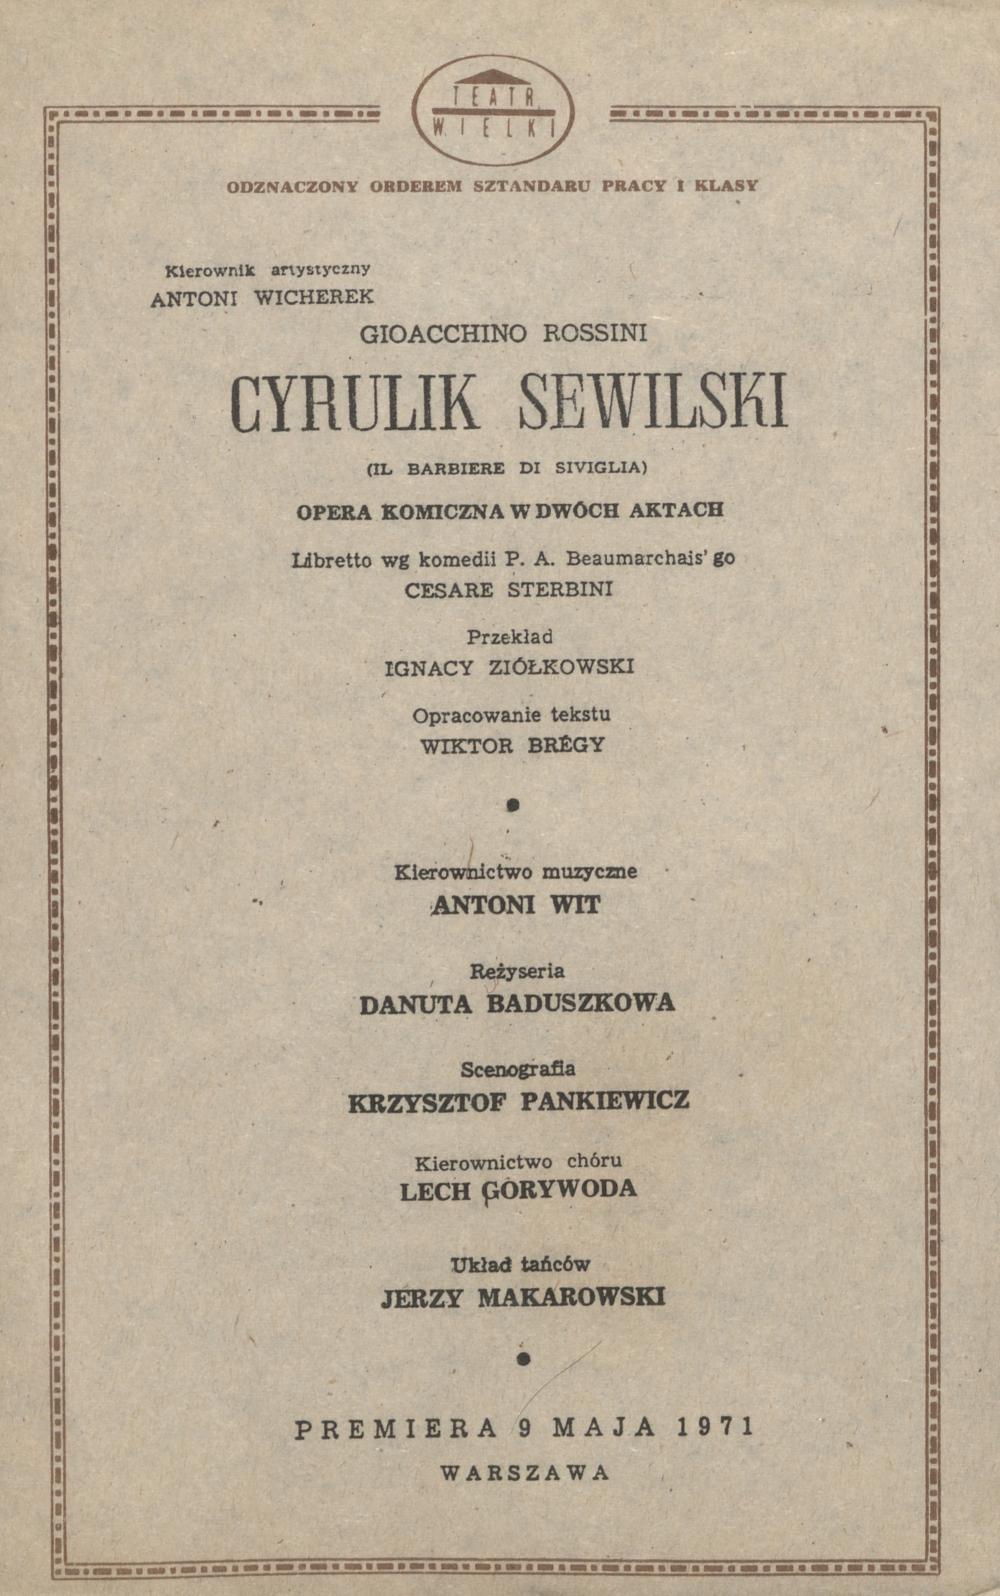 Wkładka obsadowa „Cyrulik Sewilski” Gioacchino Rossini 07-11-1979